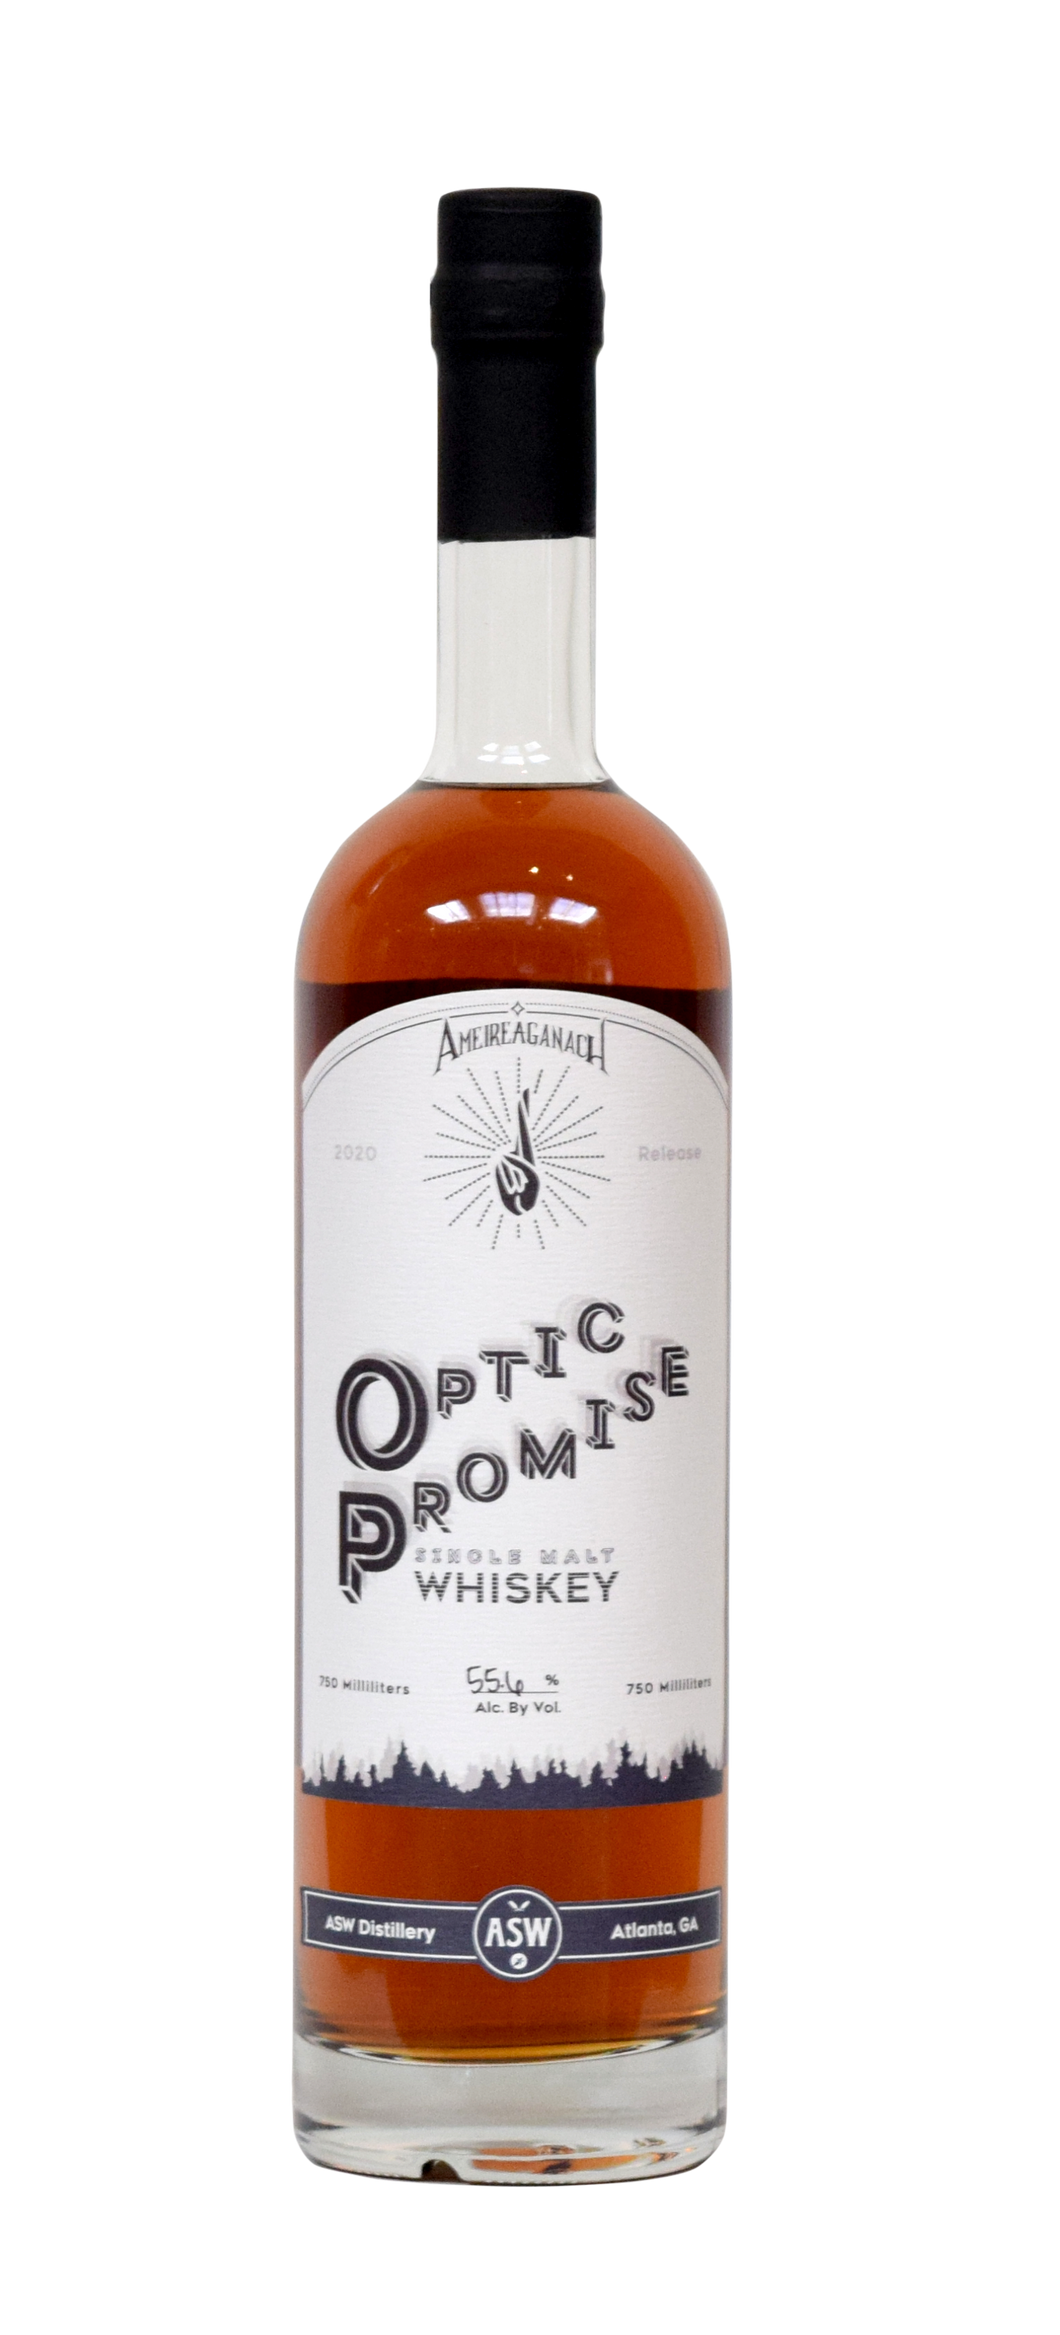 ASW Distillery Optic Promise